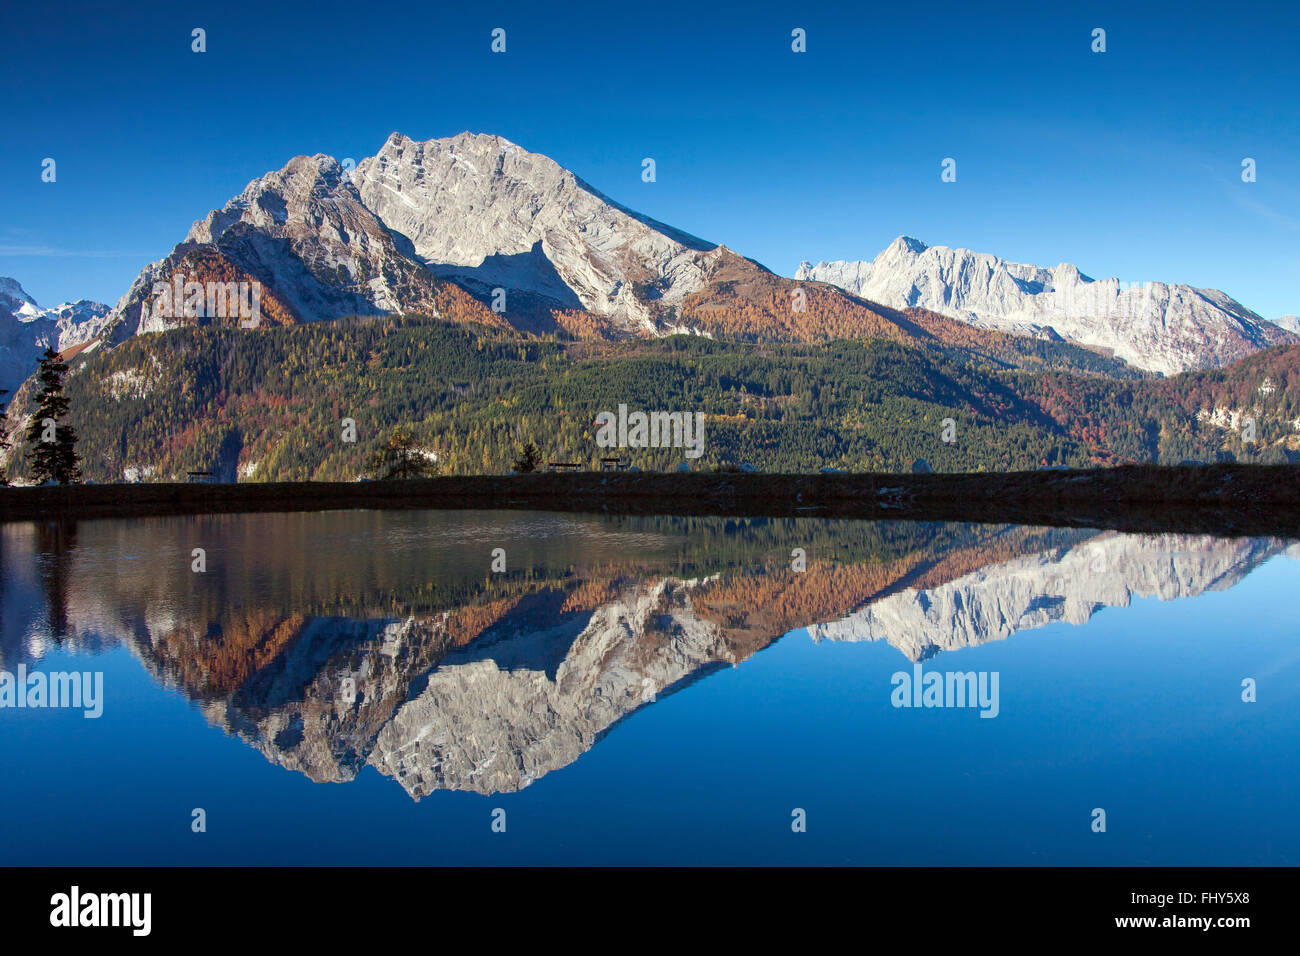 Reflection of Mount Watzmann in a small lake, Bavarian Alps near Berchtesgaden, Bavaria, Germany Stock Photo